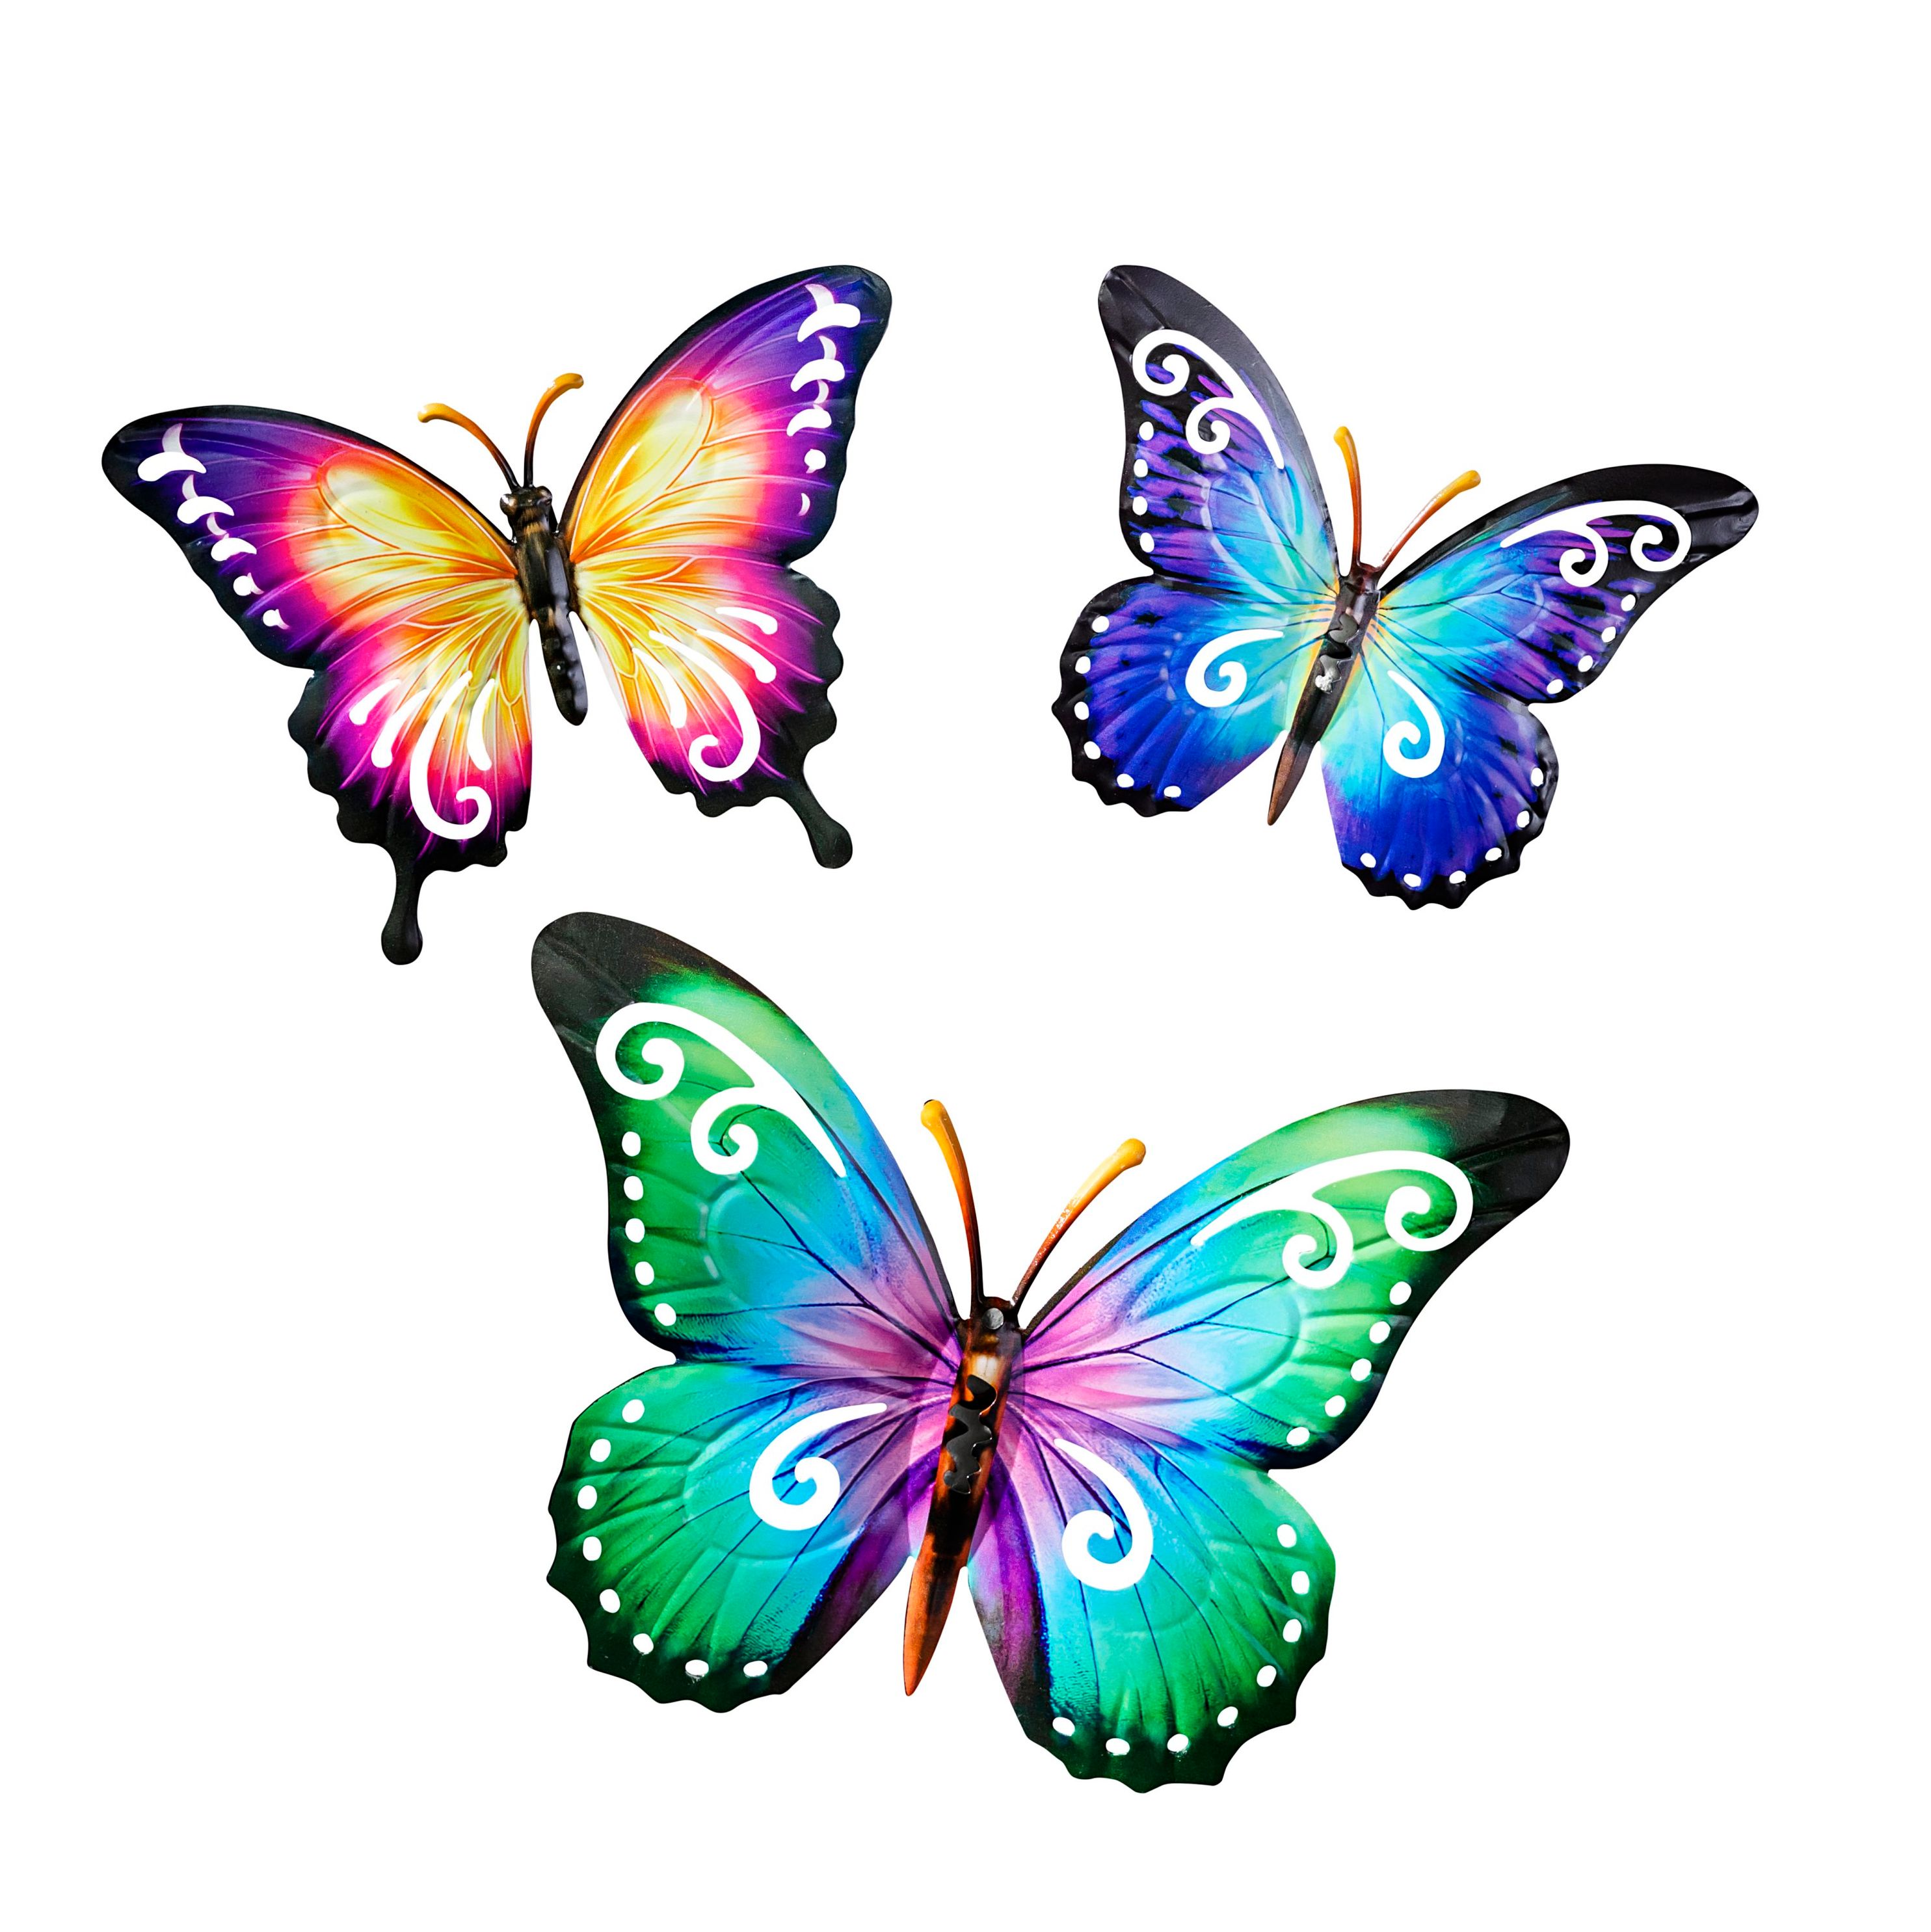 Wanddeko Schmetterling, 3er-Set jetzt bei Weltbild.de bestellen | Regale